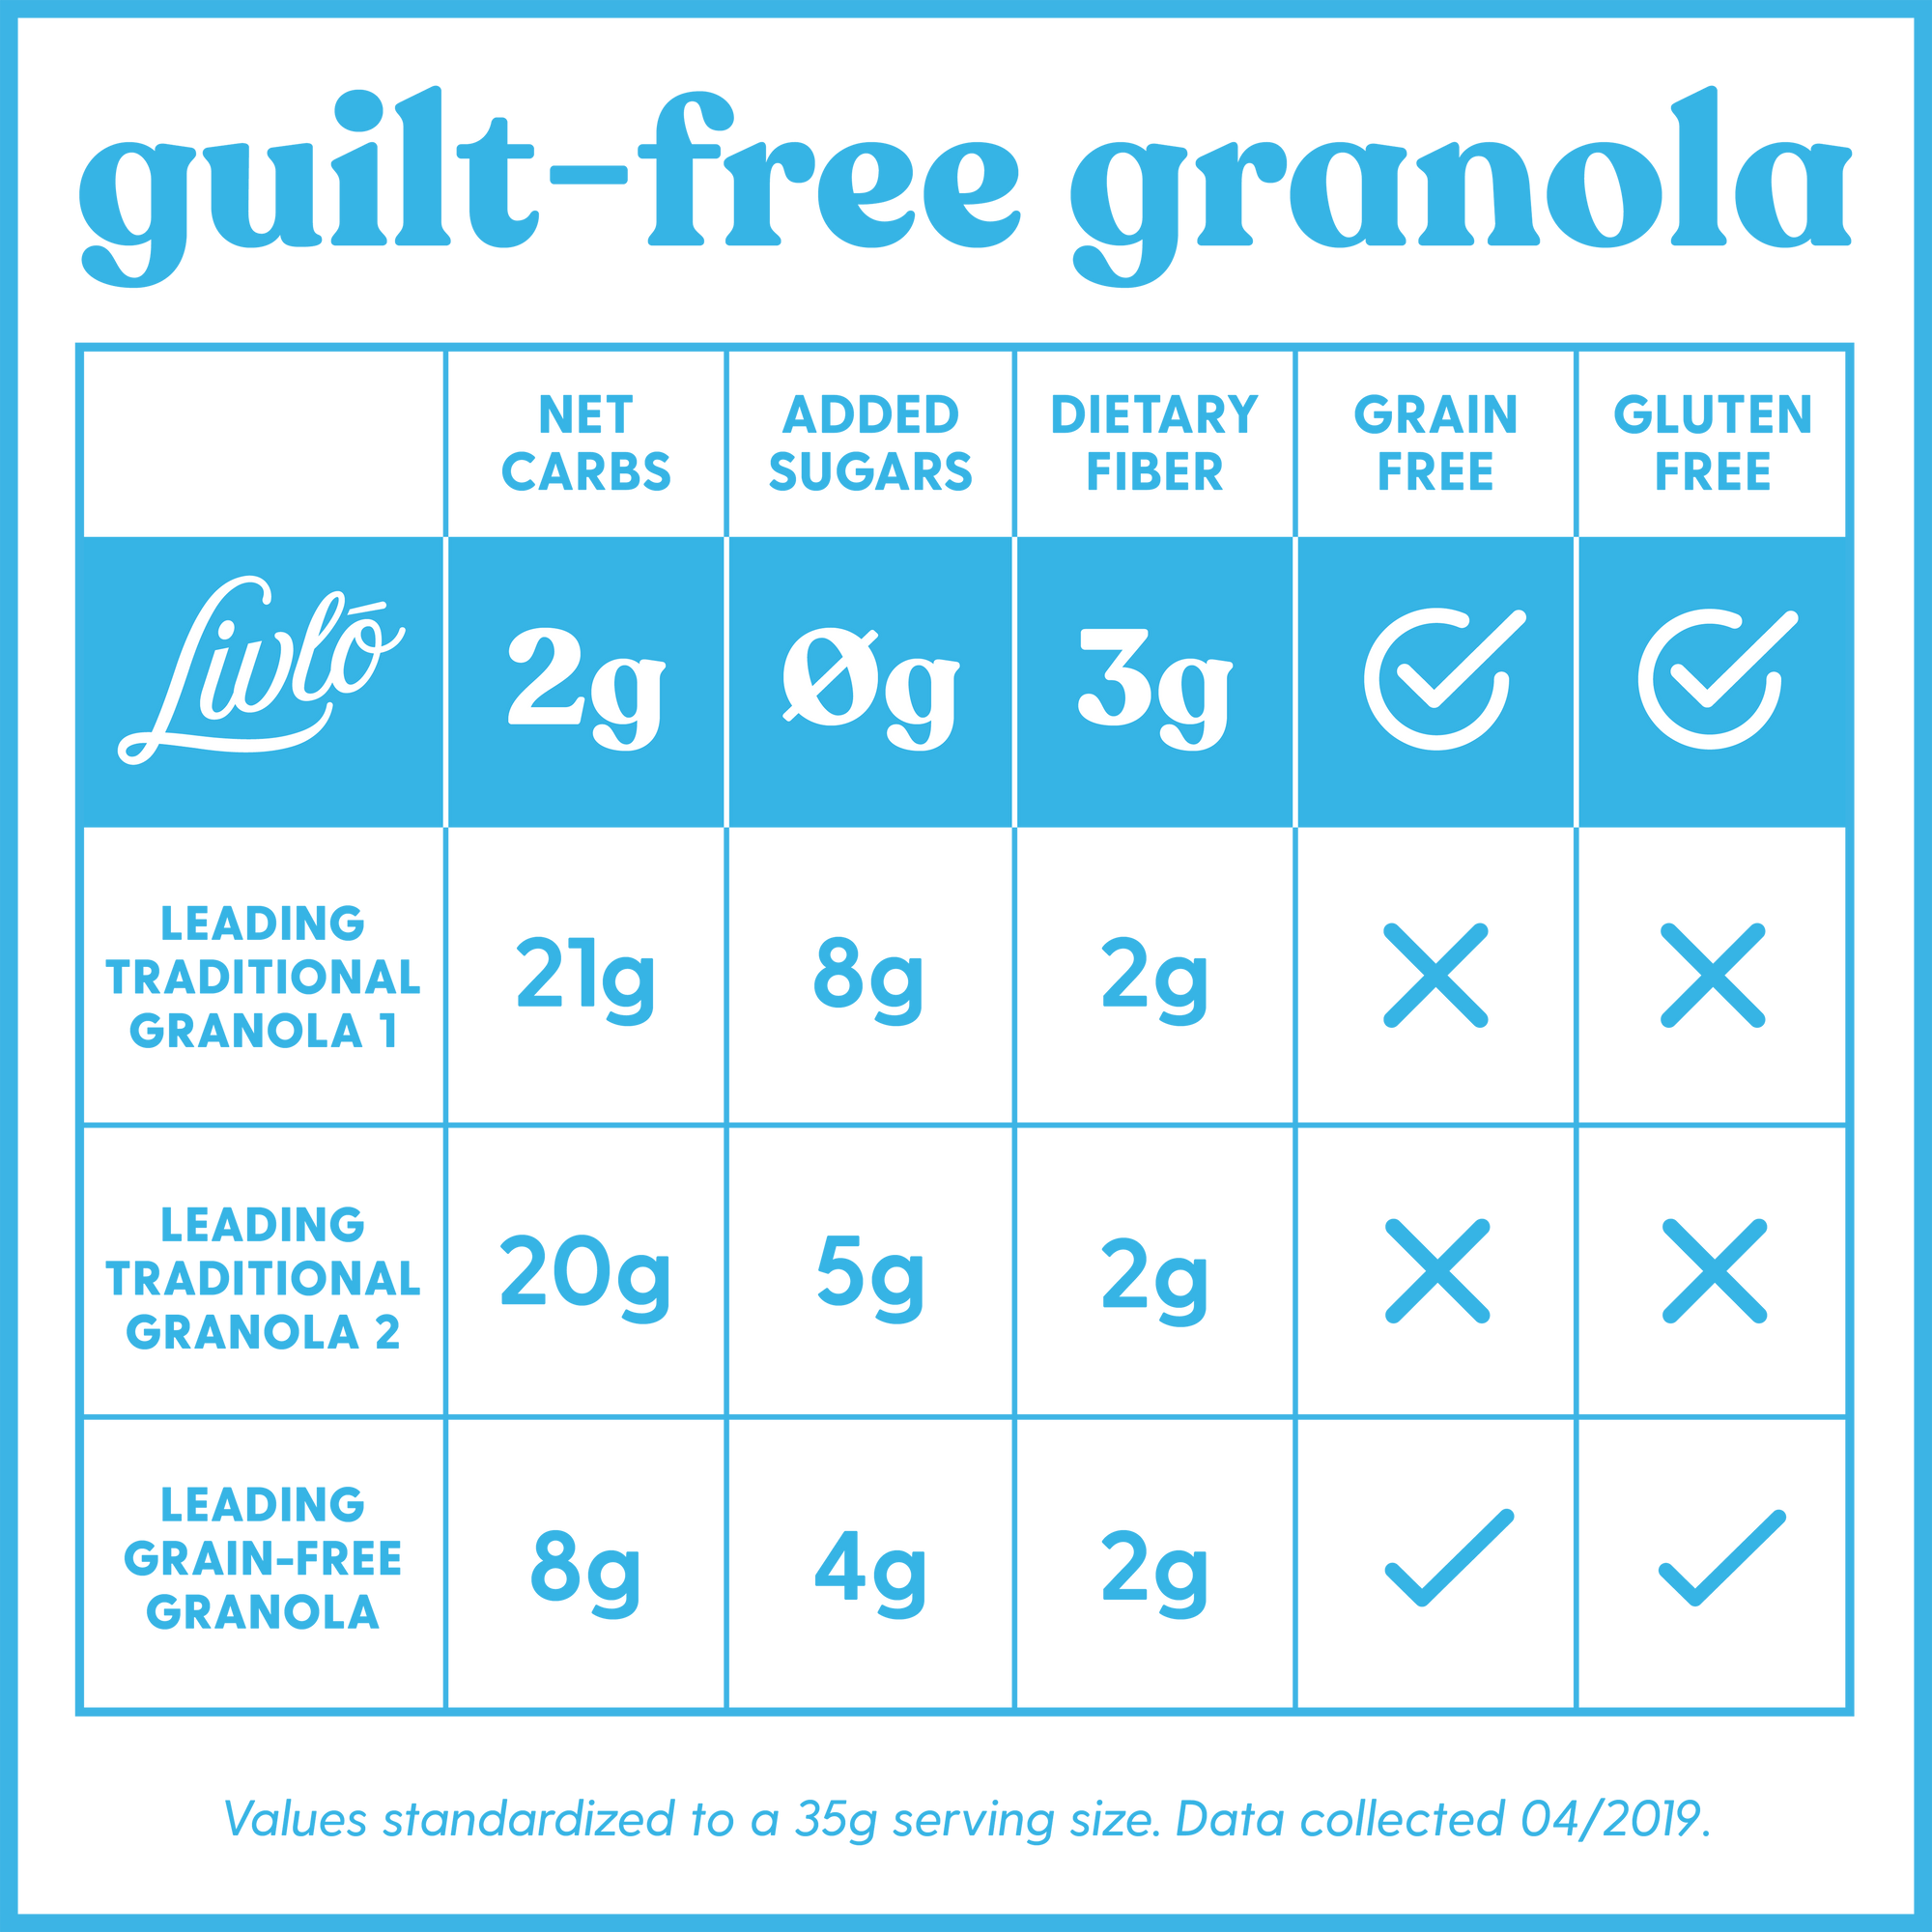 Livlo free granola